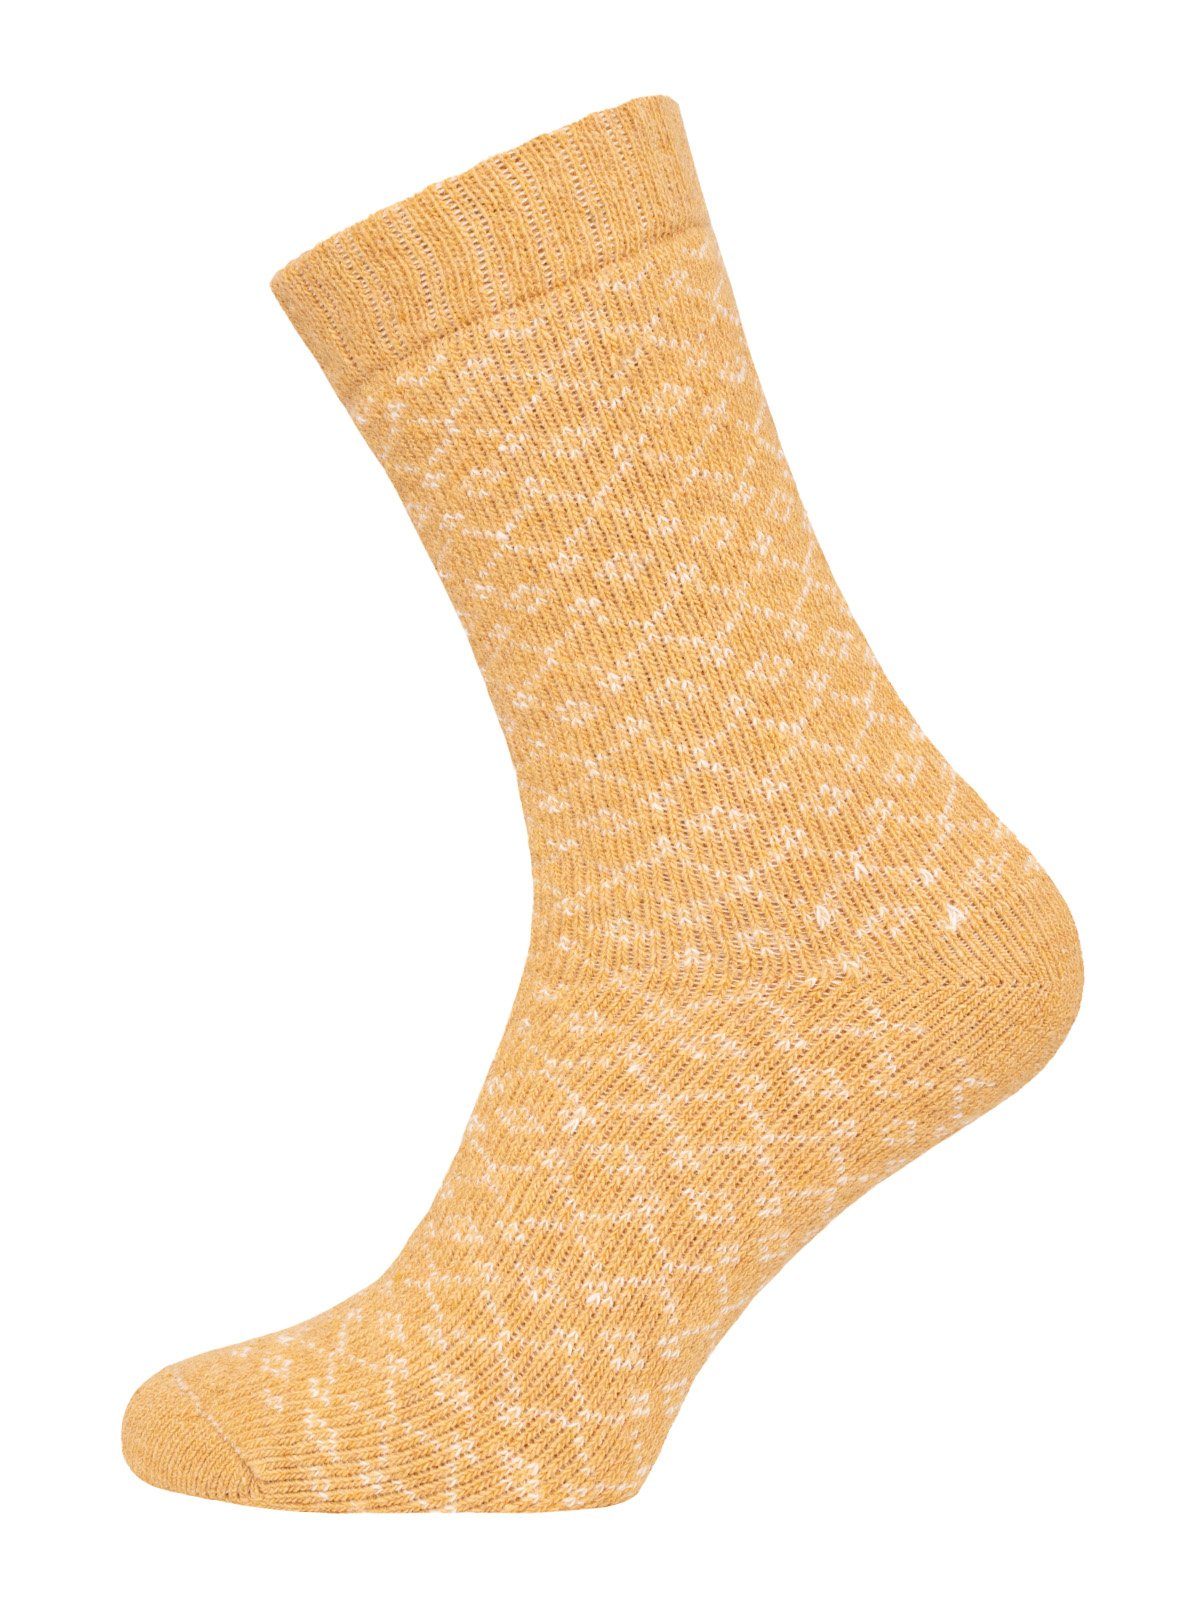 HomeOfSocks Socken Hygge Socken Dick Für Herren & Damen mit Wolle Dicke Socken Hyggelig Warm Mit Hohem 45% Wollanteil In Bunten Design Senf